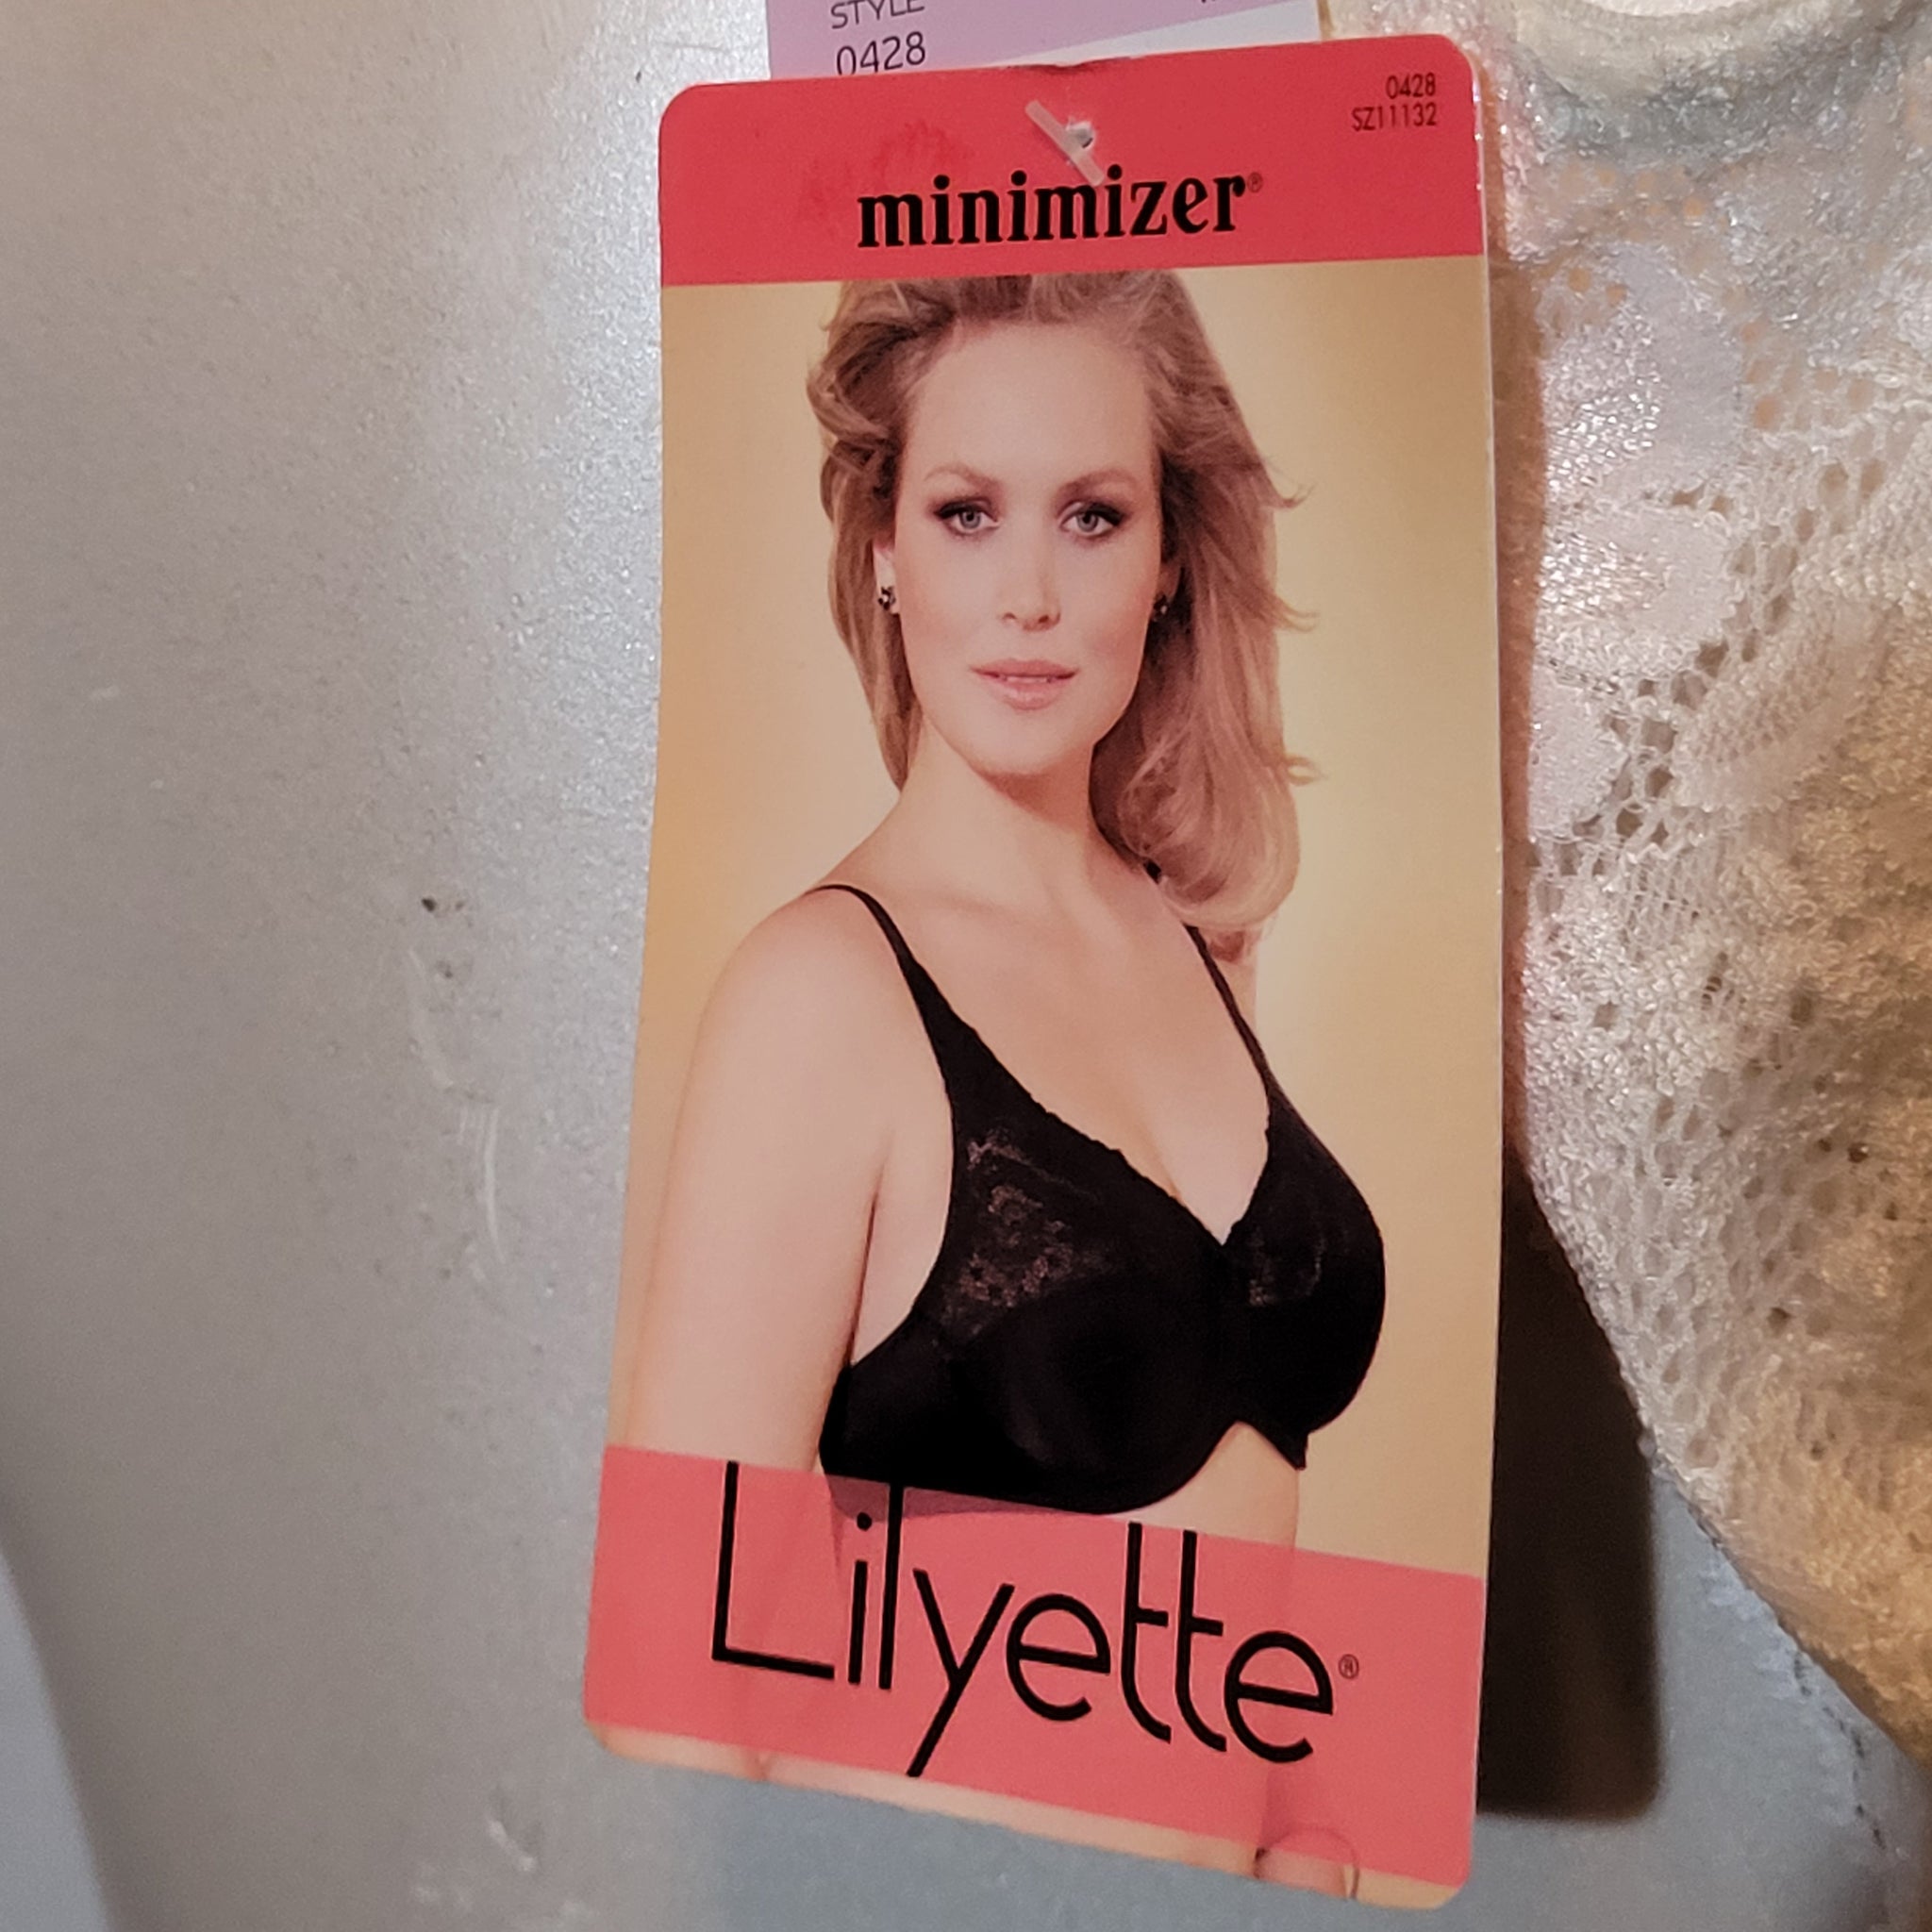 Vintage New With Tags Lilyette 0428 Comfort Lace Minimizer Bra